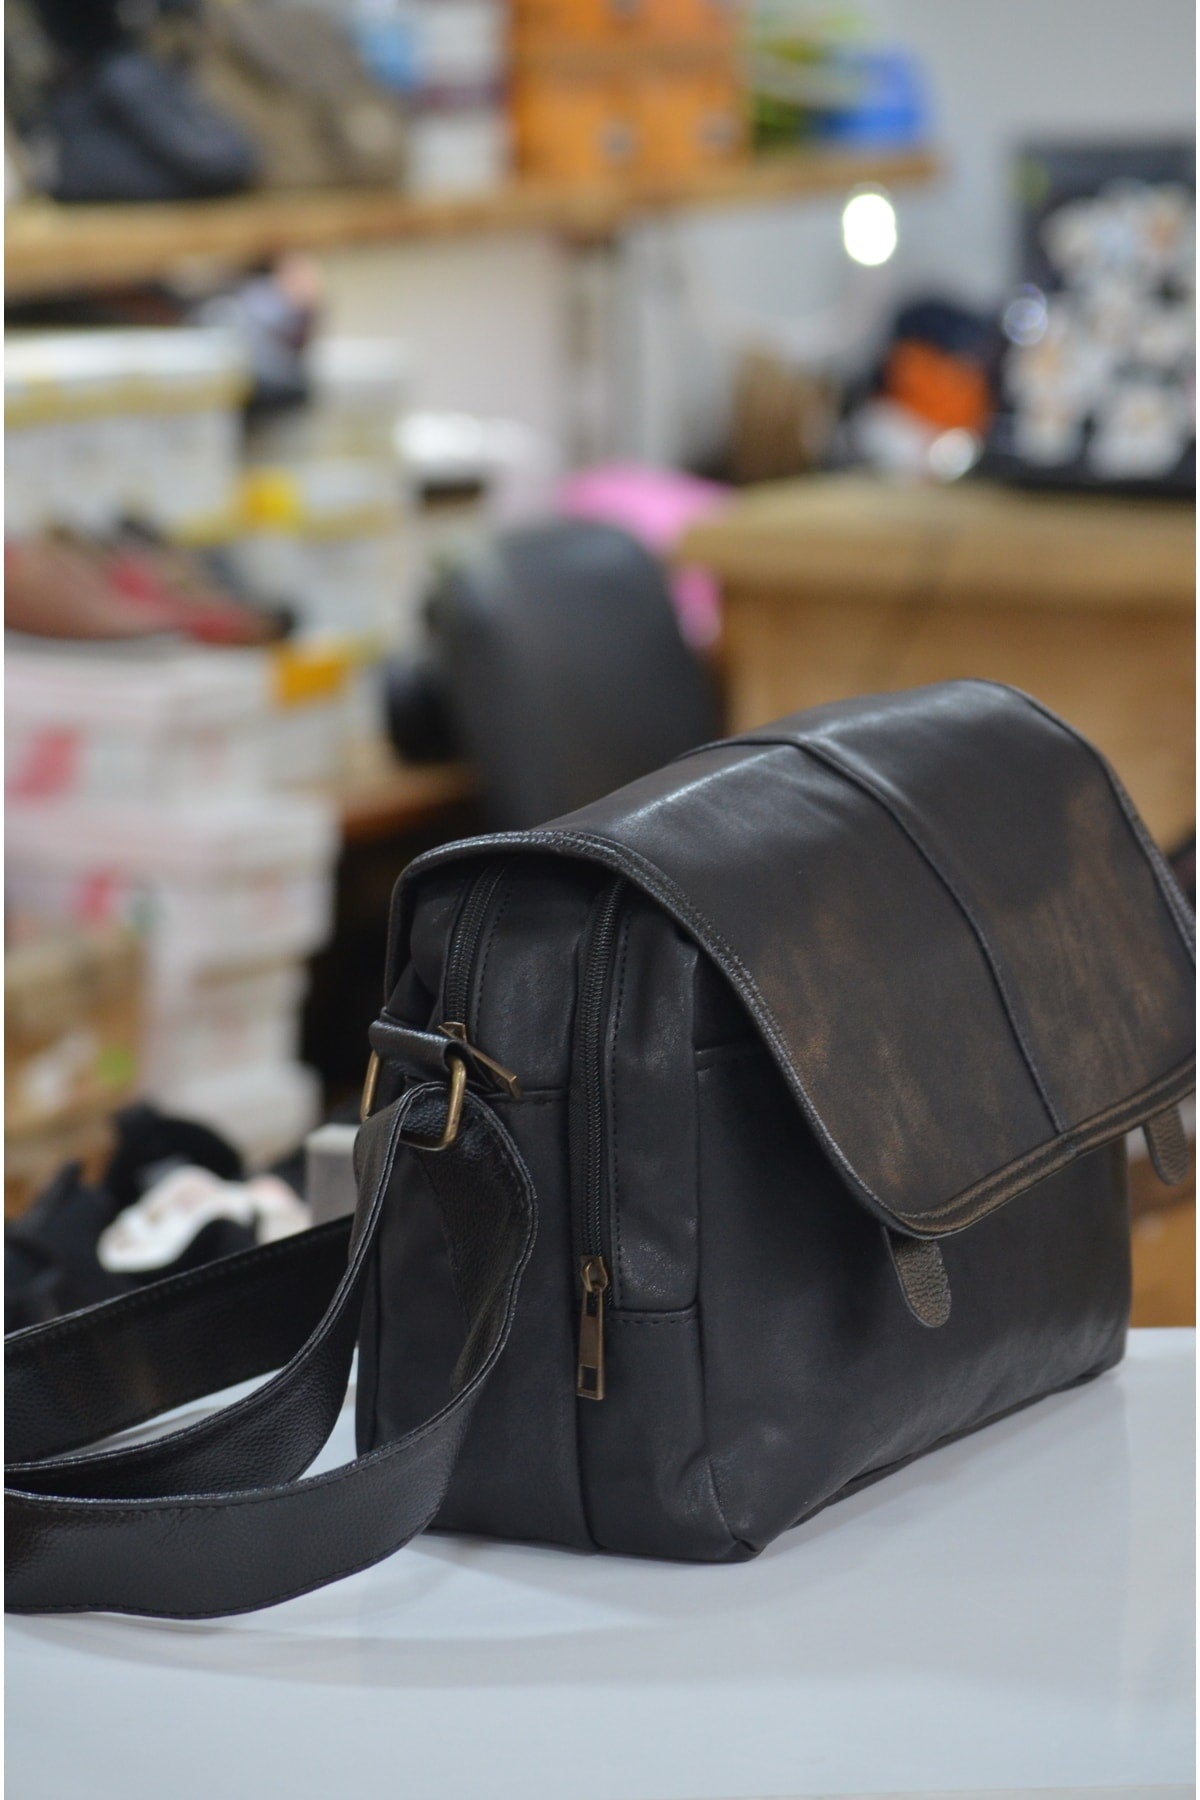 Handy Unisex Black Messenger Bag, Briefcase, Travel Bag with Zipper Cover